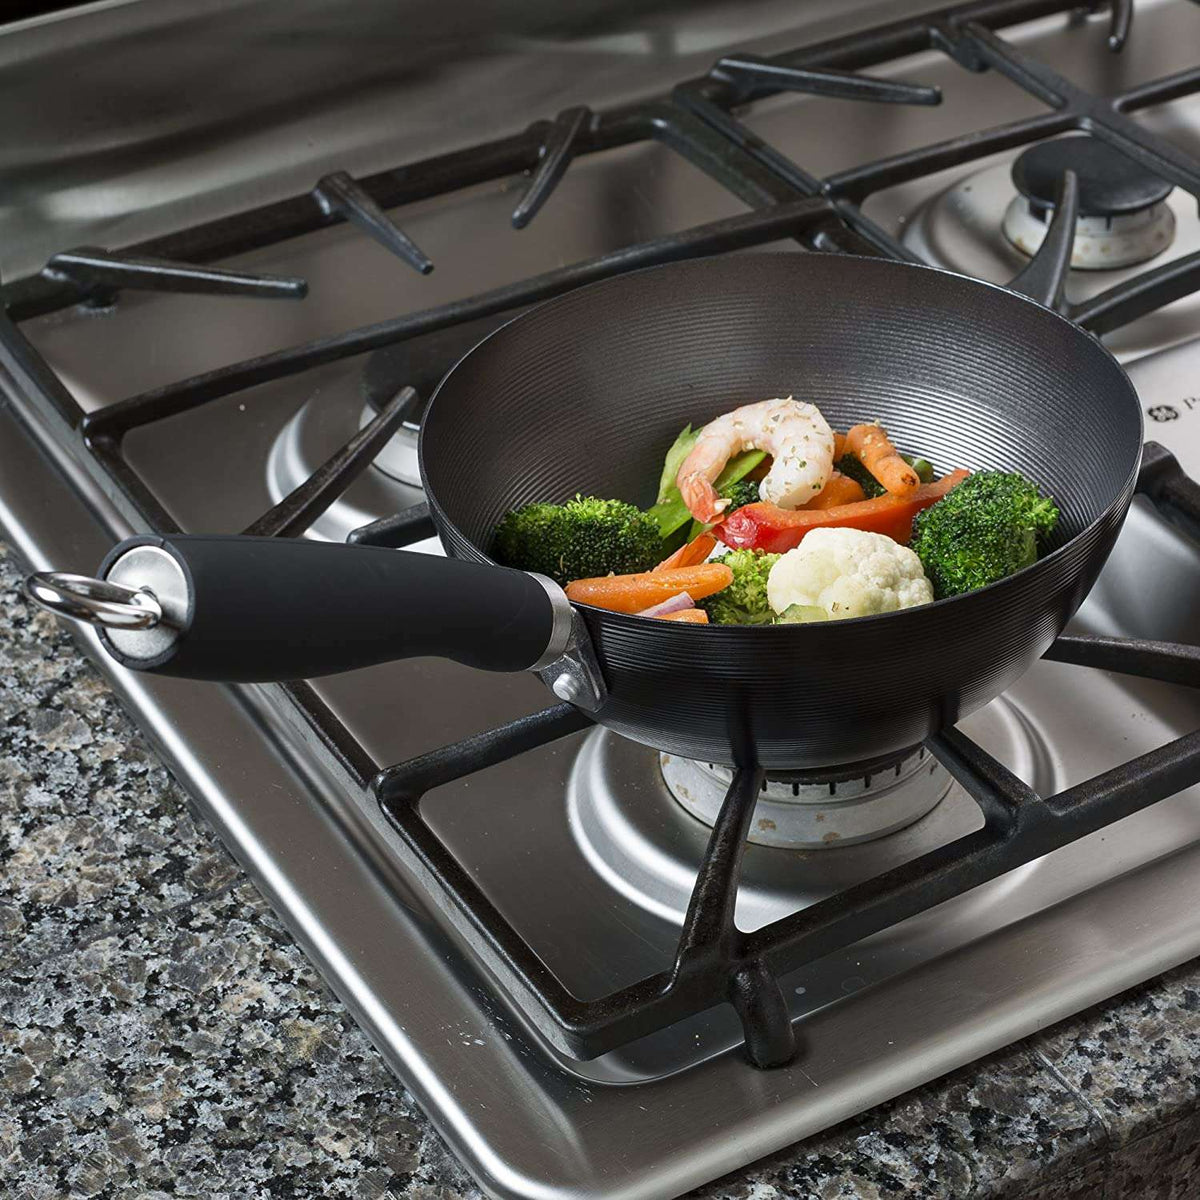 Carbon Steel Non-Stick Wok, 8 Inch - Ecolution – Ecolution Cookware